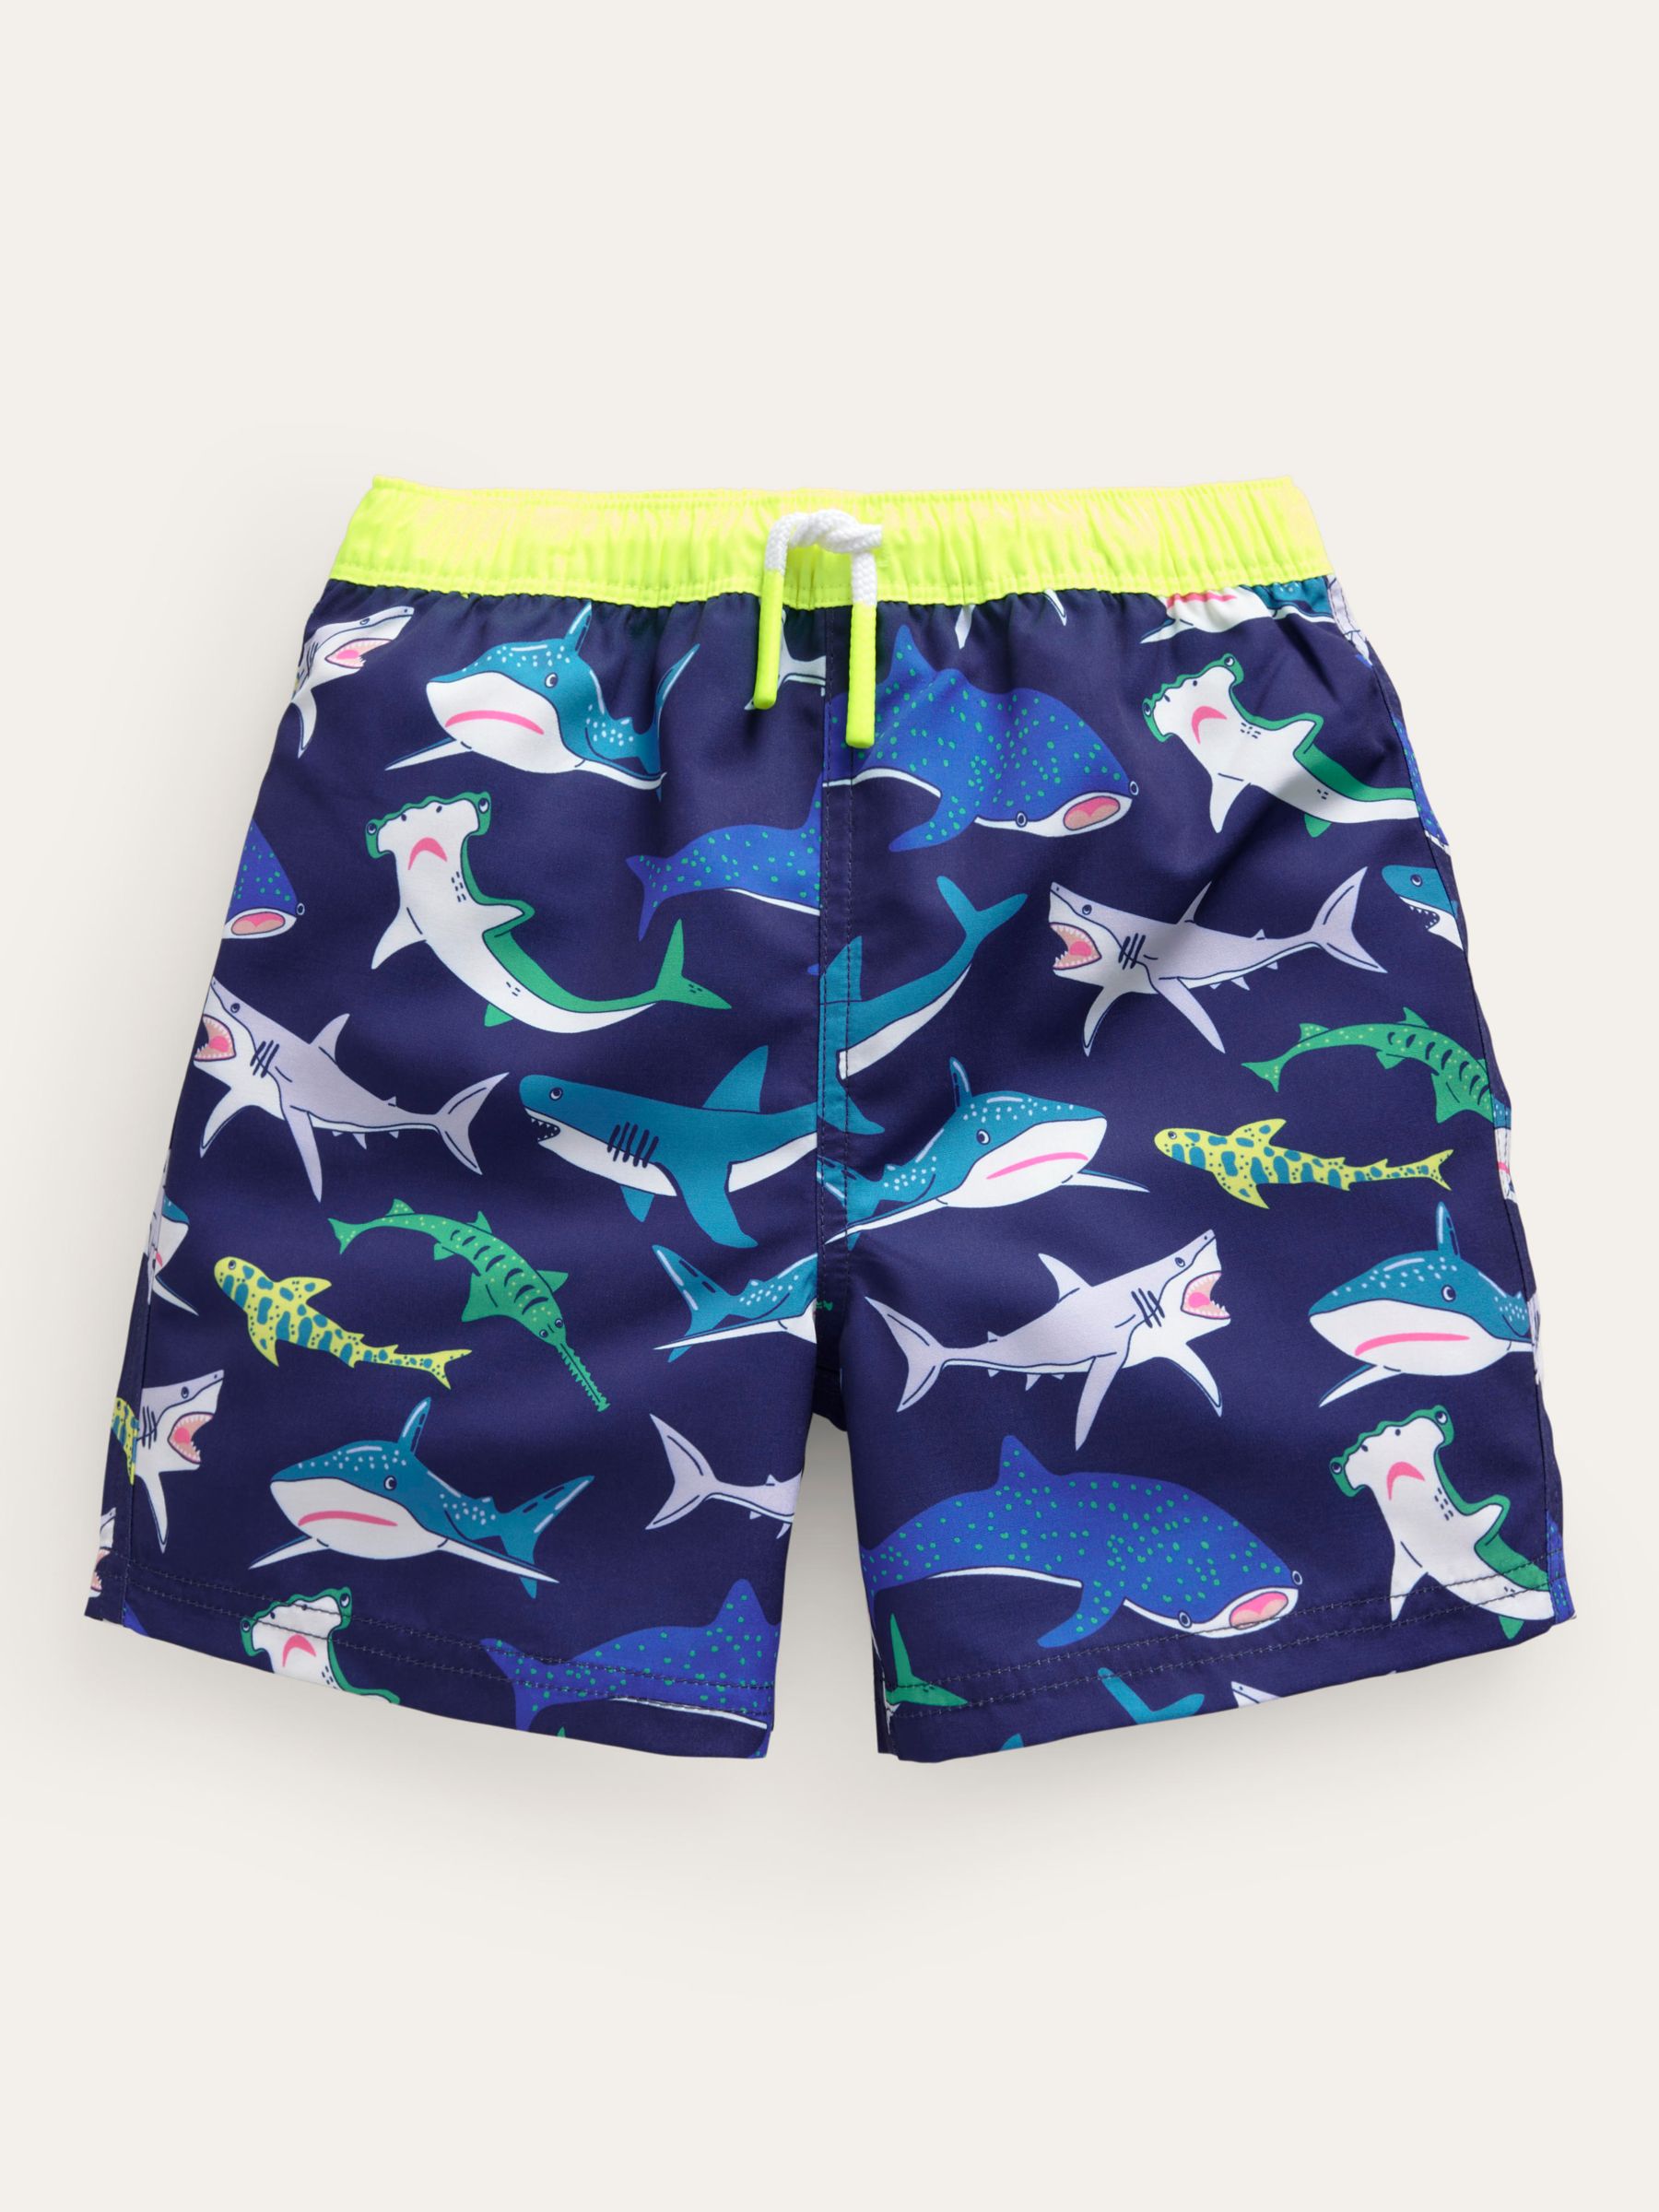 Mini Boden Kids' Printed Swim Shorts, Multi Sharks, 3-4 years